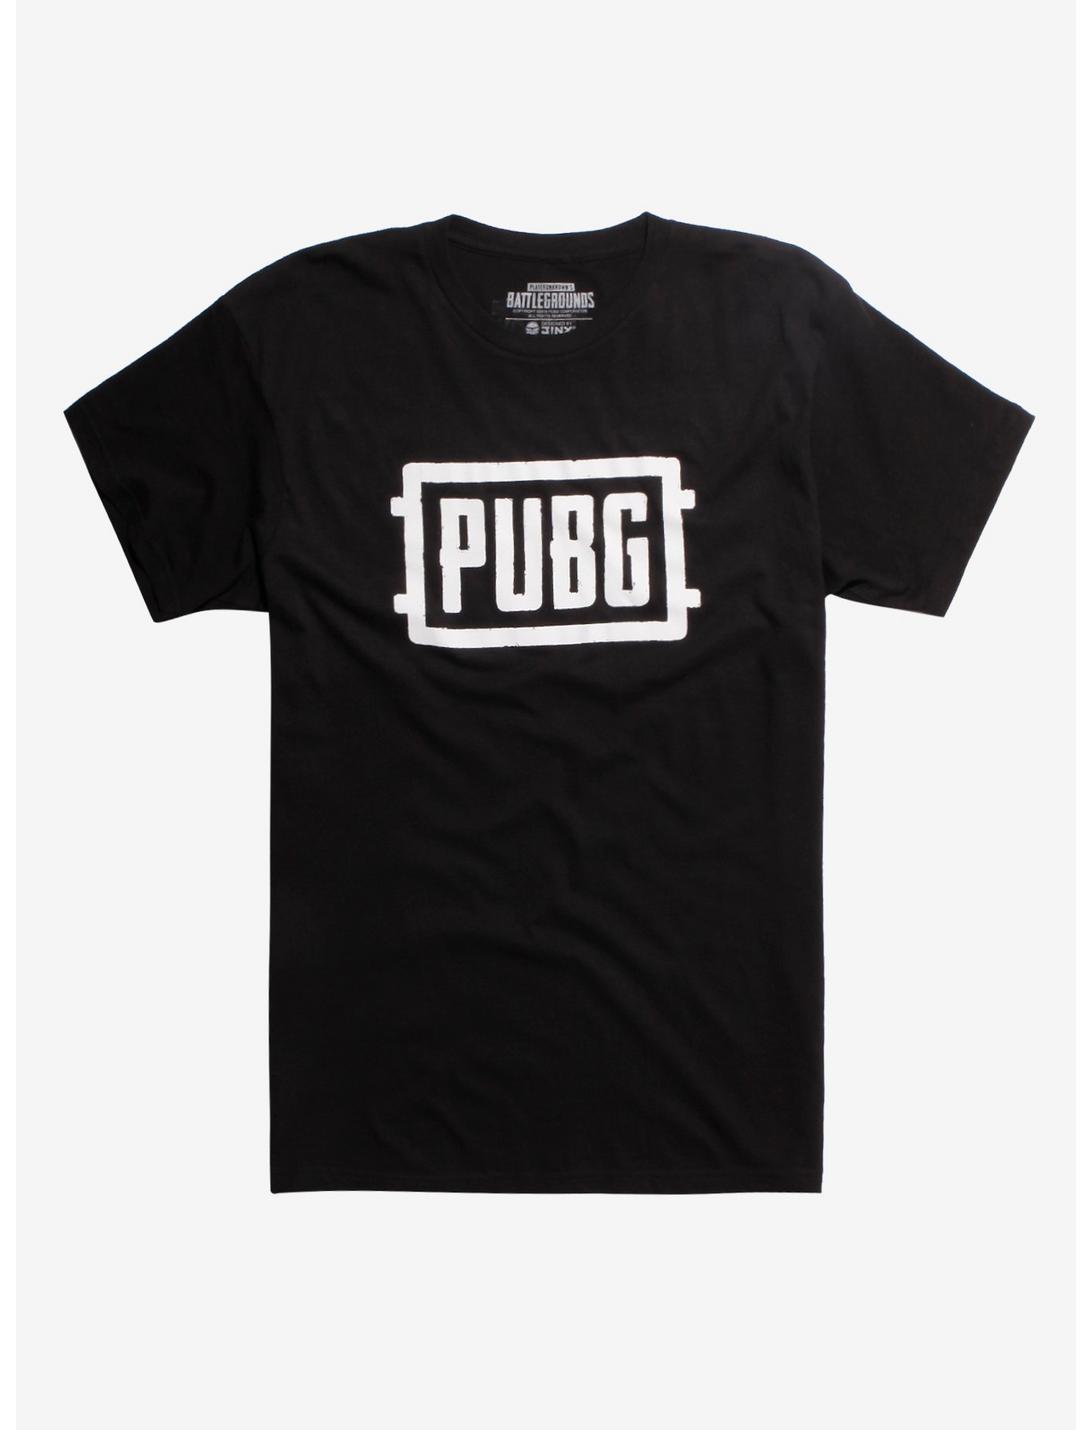 PlayerUnknown's Battlegrounds PUBG Logo T-Shirt Hot Topic Exclusive, BLACK, hi-res